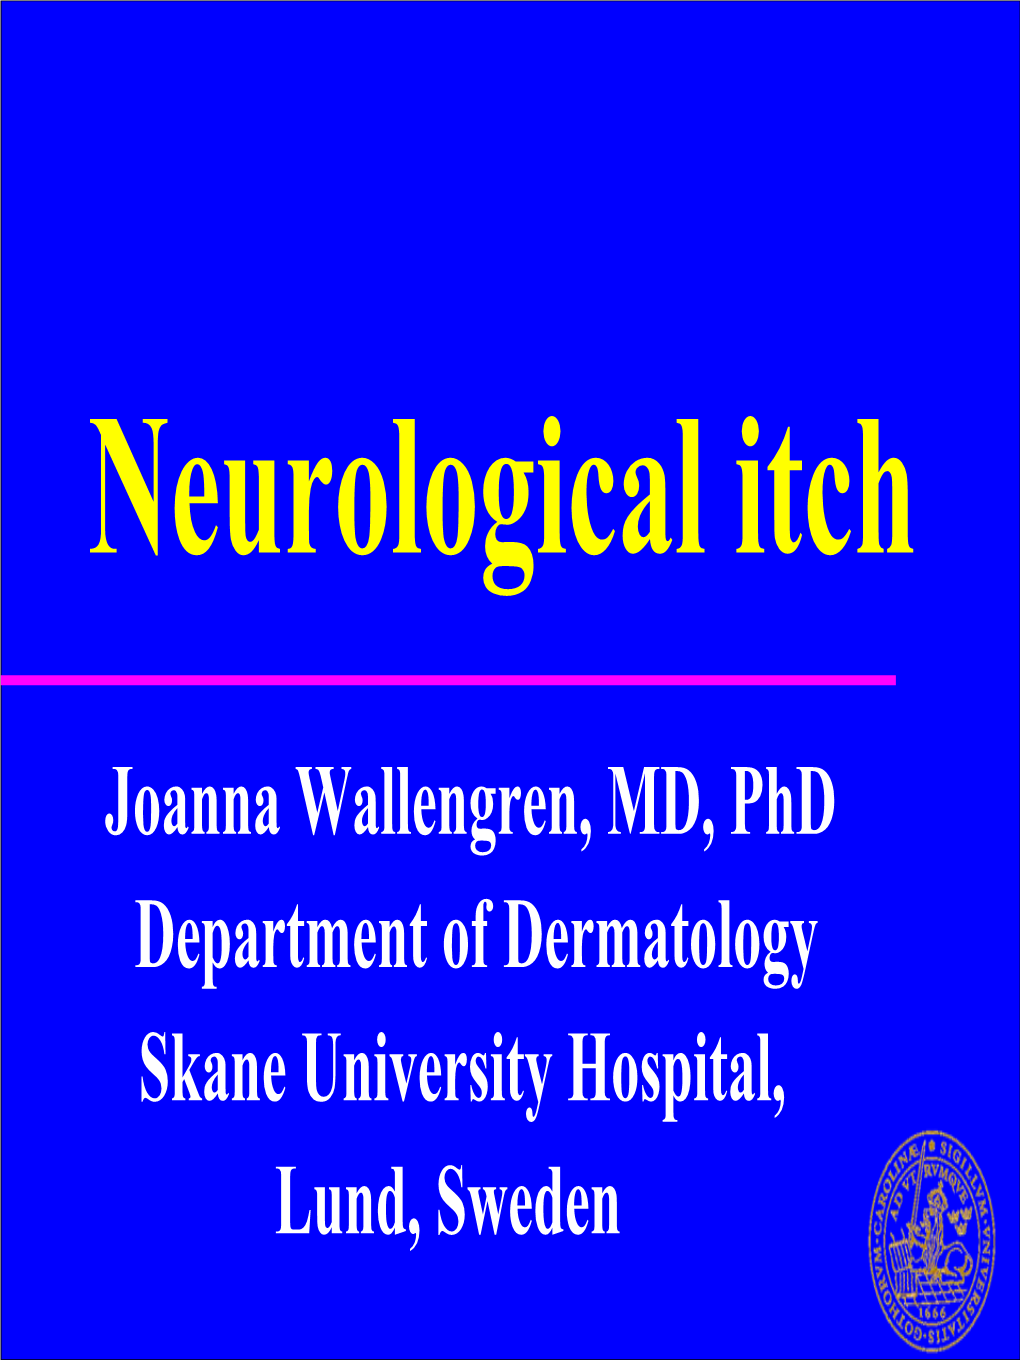 Un Update on Neuropathic Itch